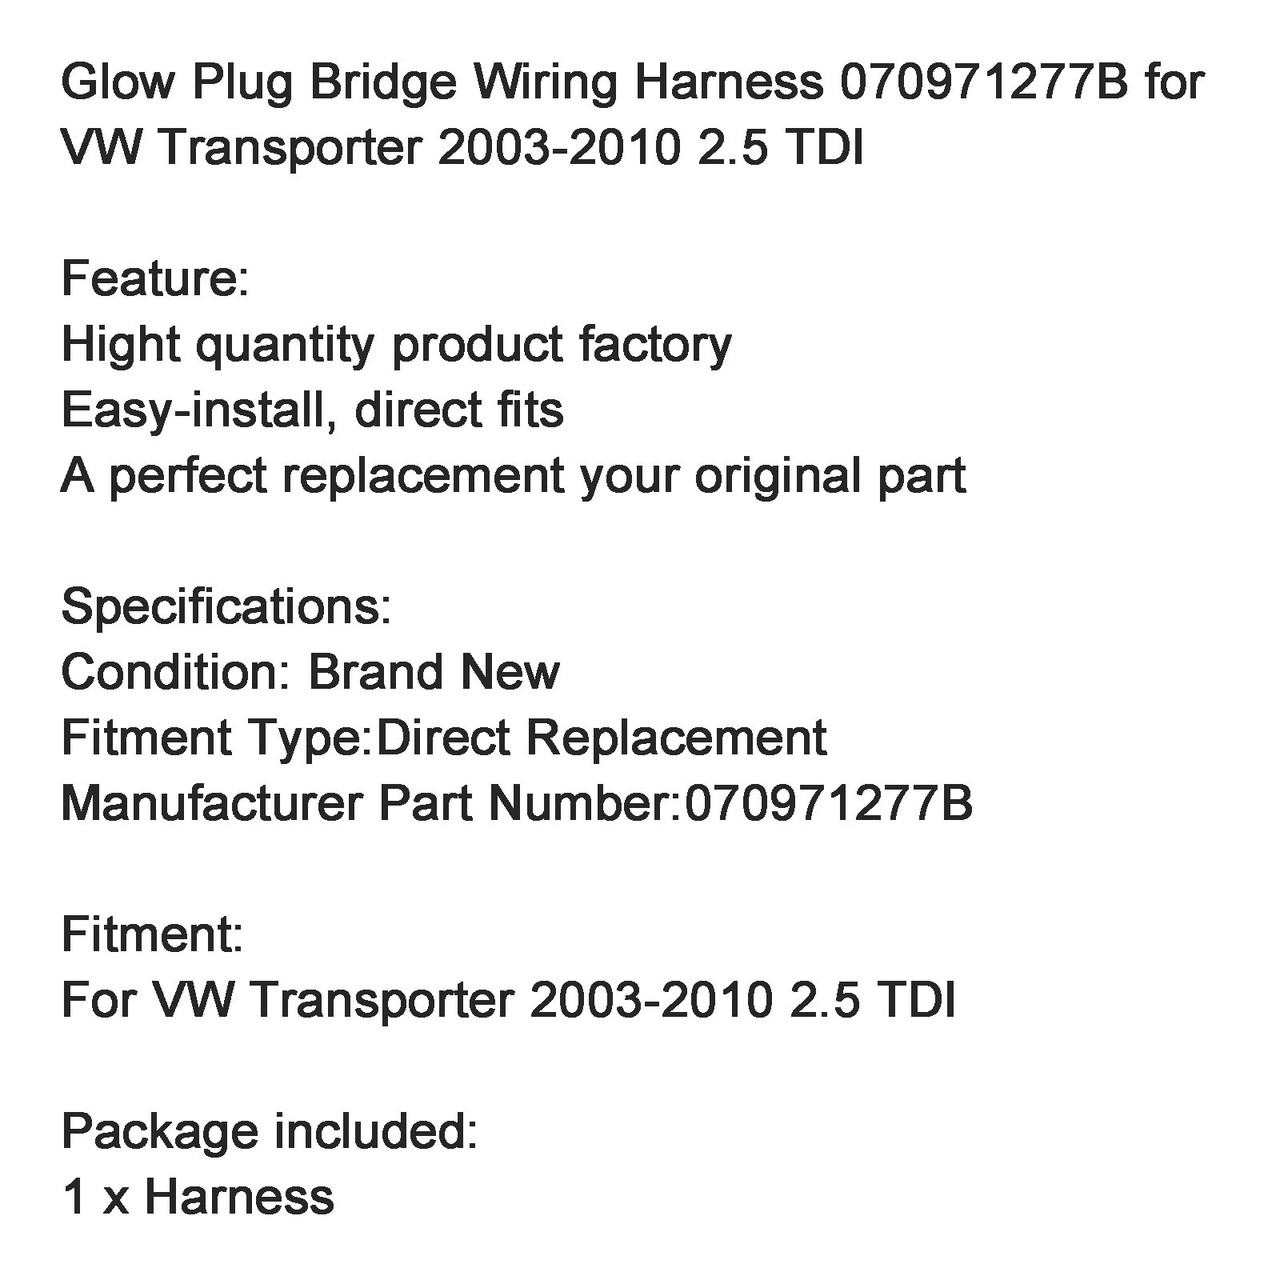 Glow Plug Bridge Wiring Harness 070971277B for VW Transporter 2003-2010 2.5 TDI